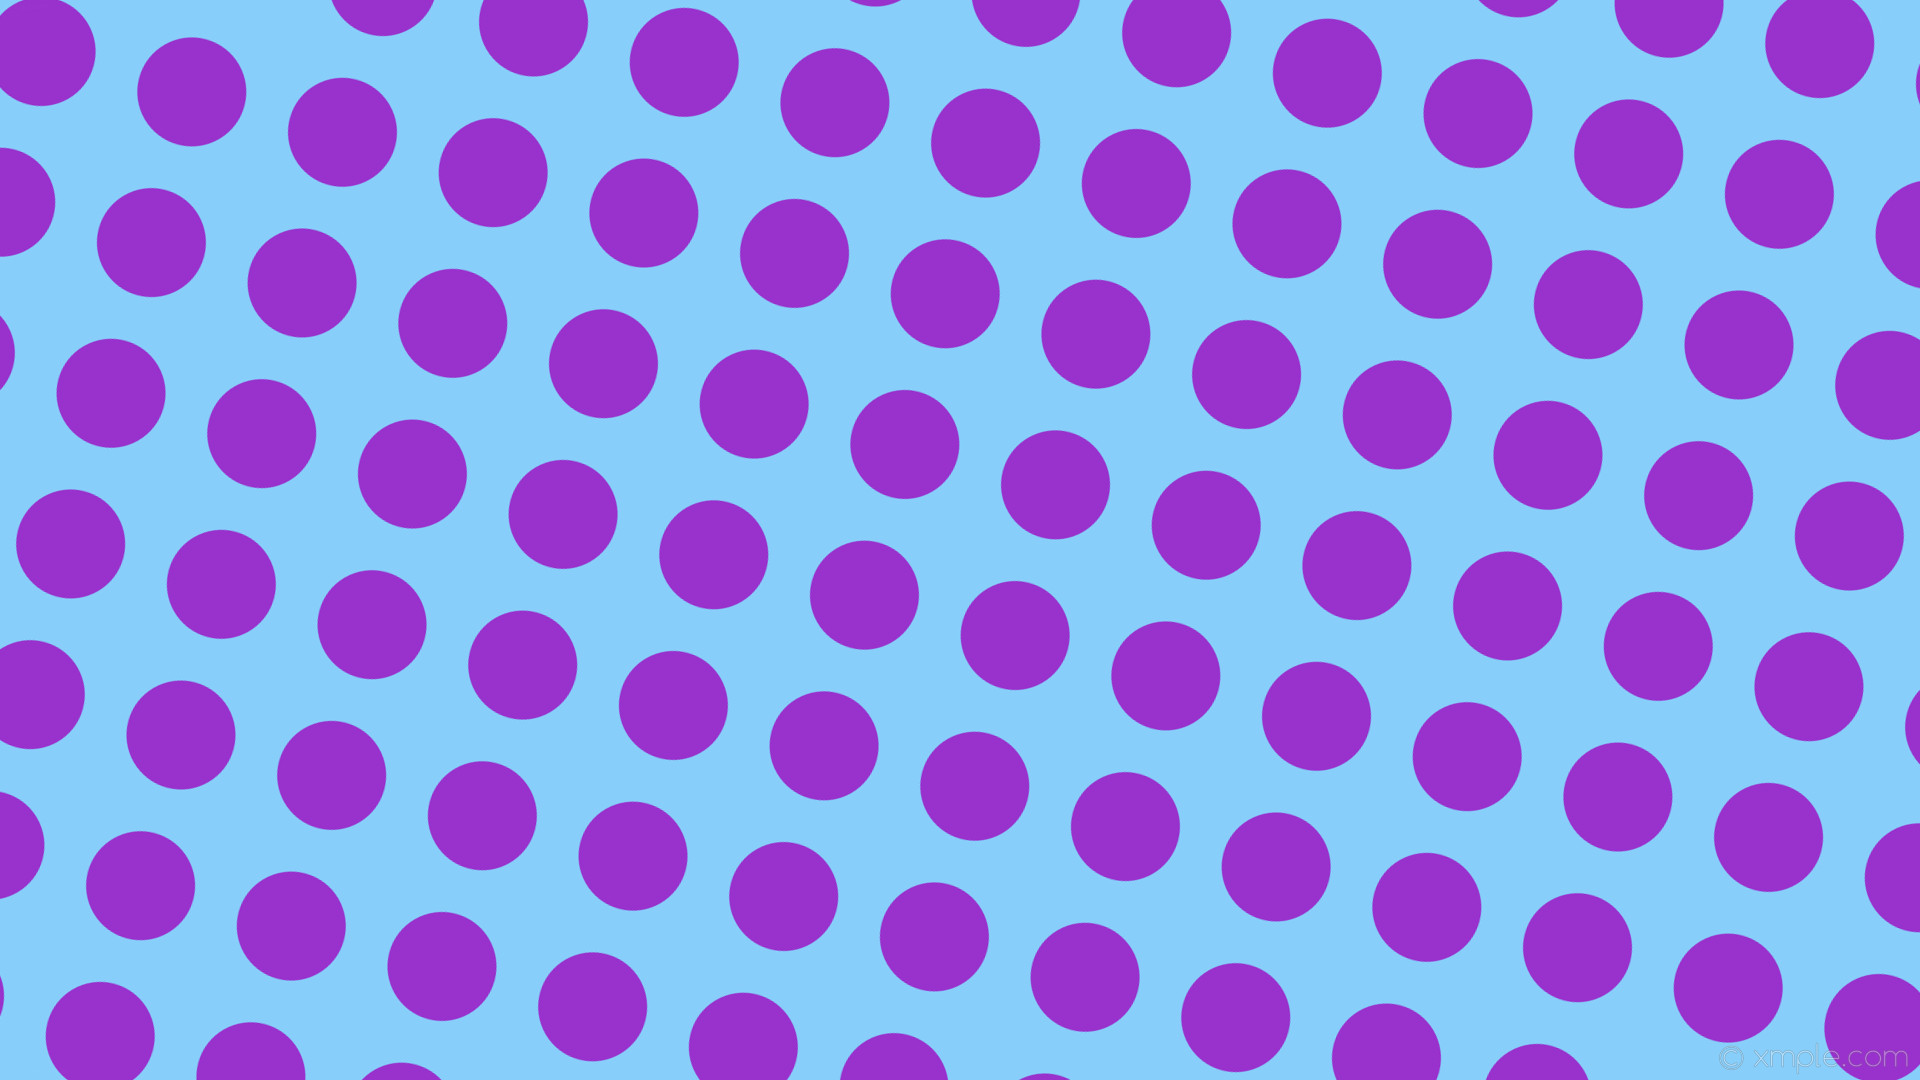 1920x1080 wallpaper spots polka dots blue purple light sky blue dark orchid #87cefa  #9932cc 345